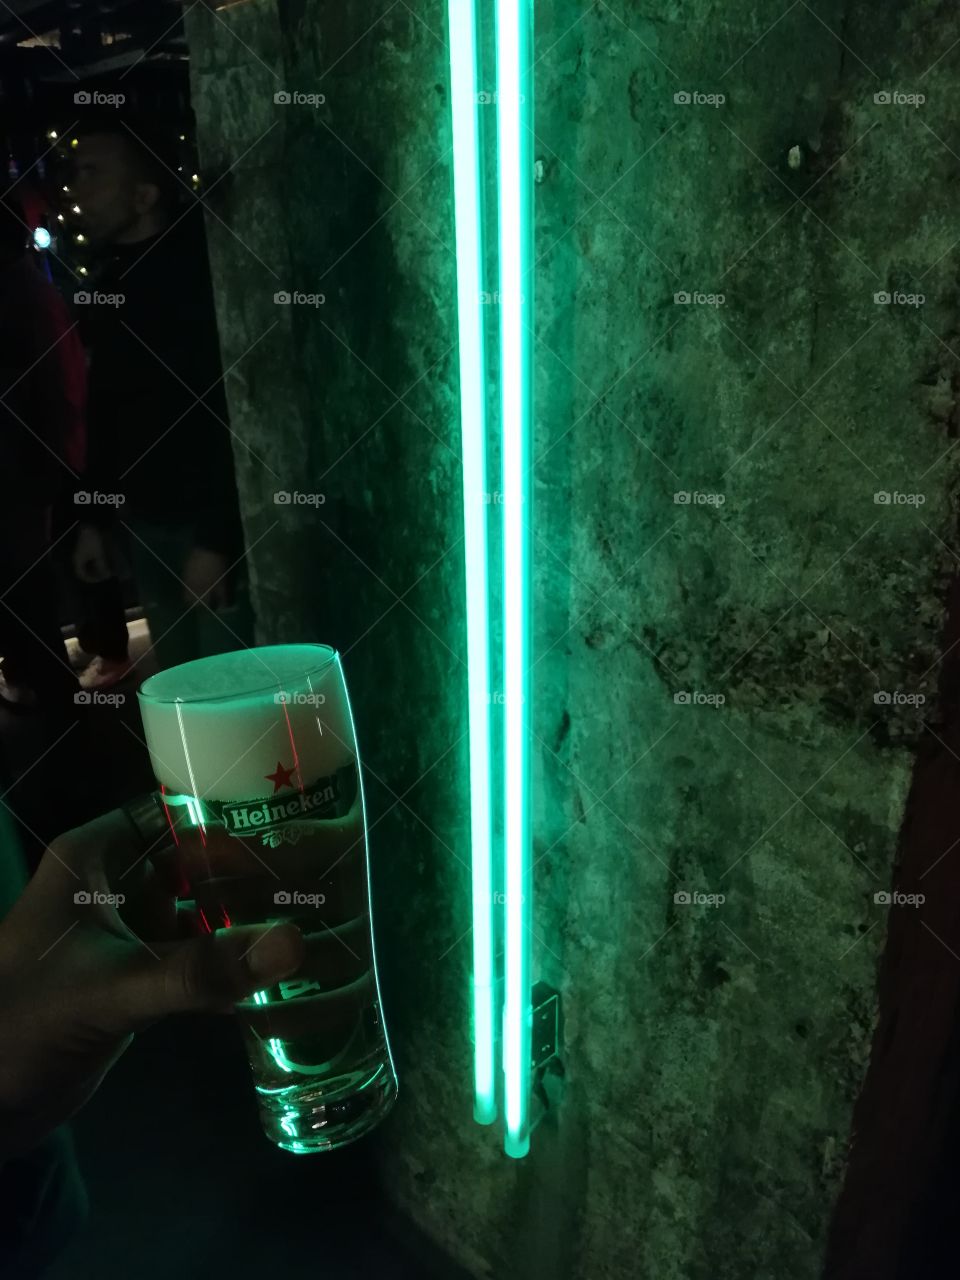 A glass of cold Heineken beer in Amsterdam